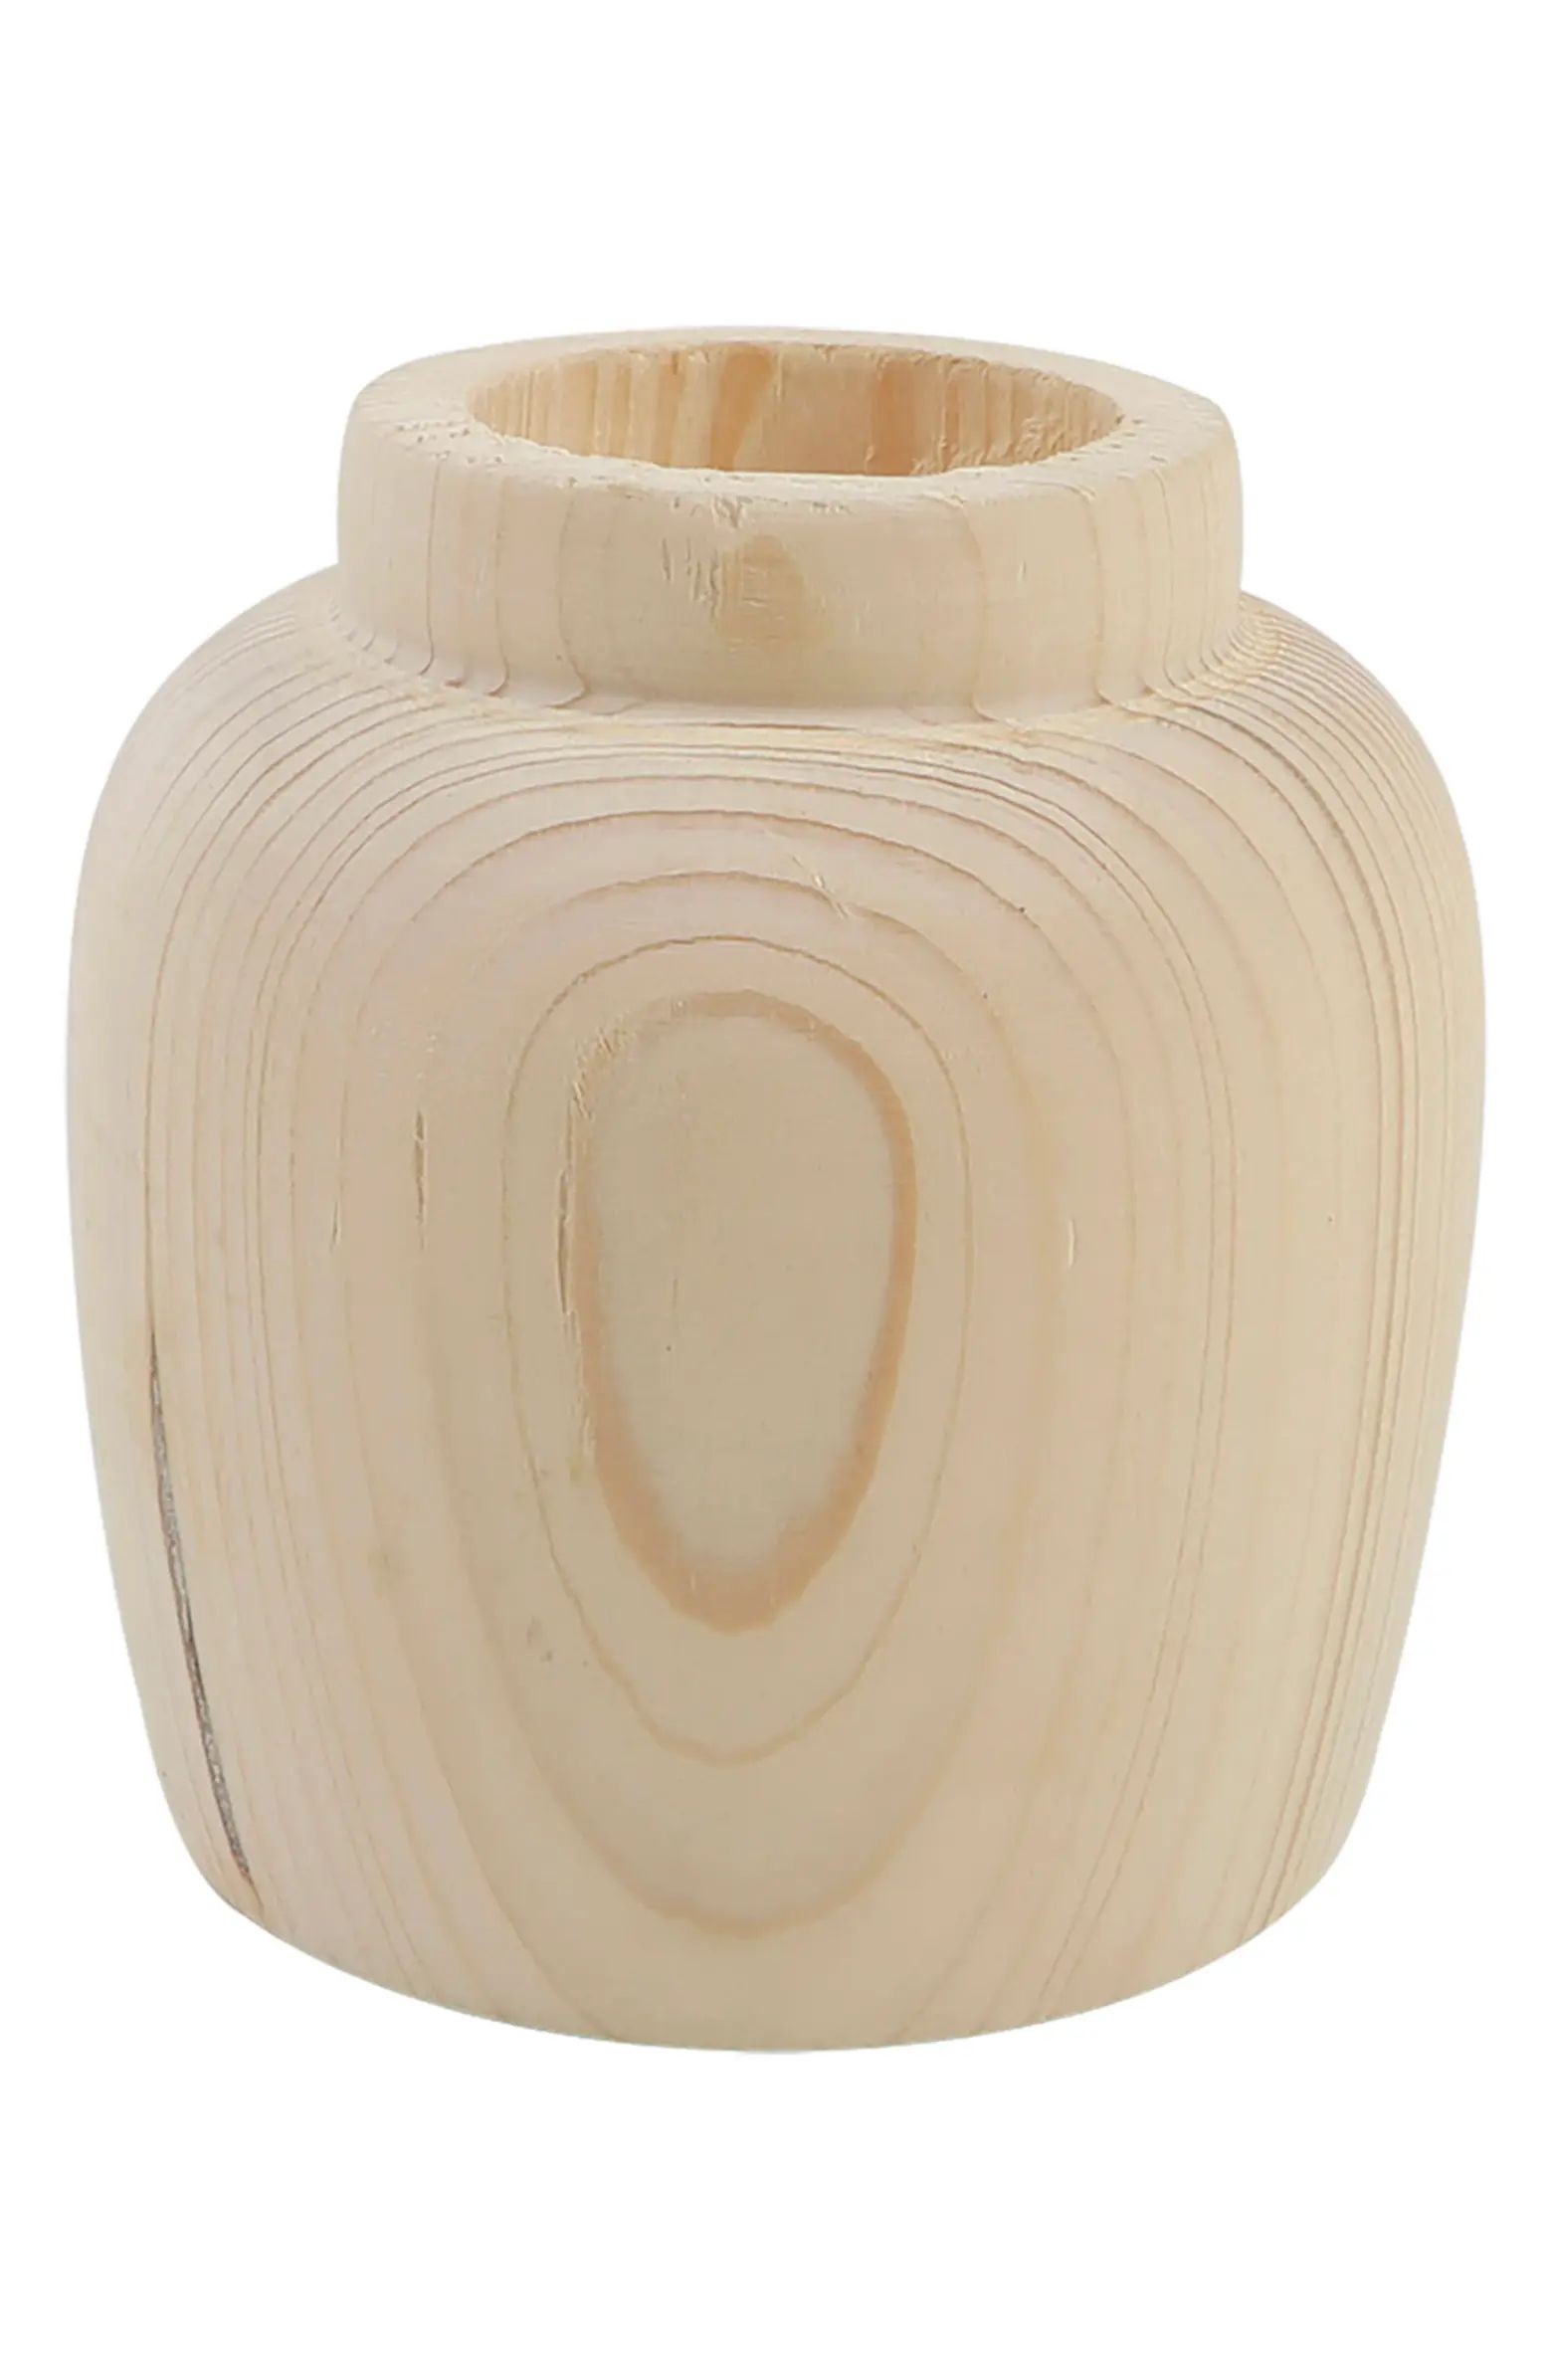 Wooden Vase | Nordstrom Rack